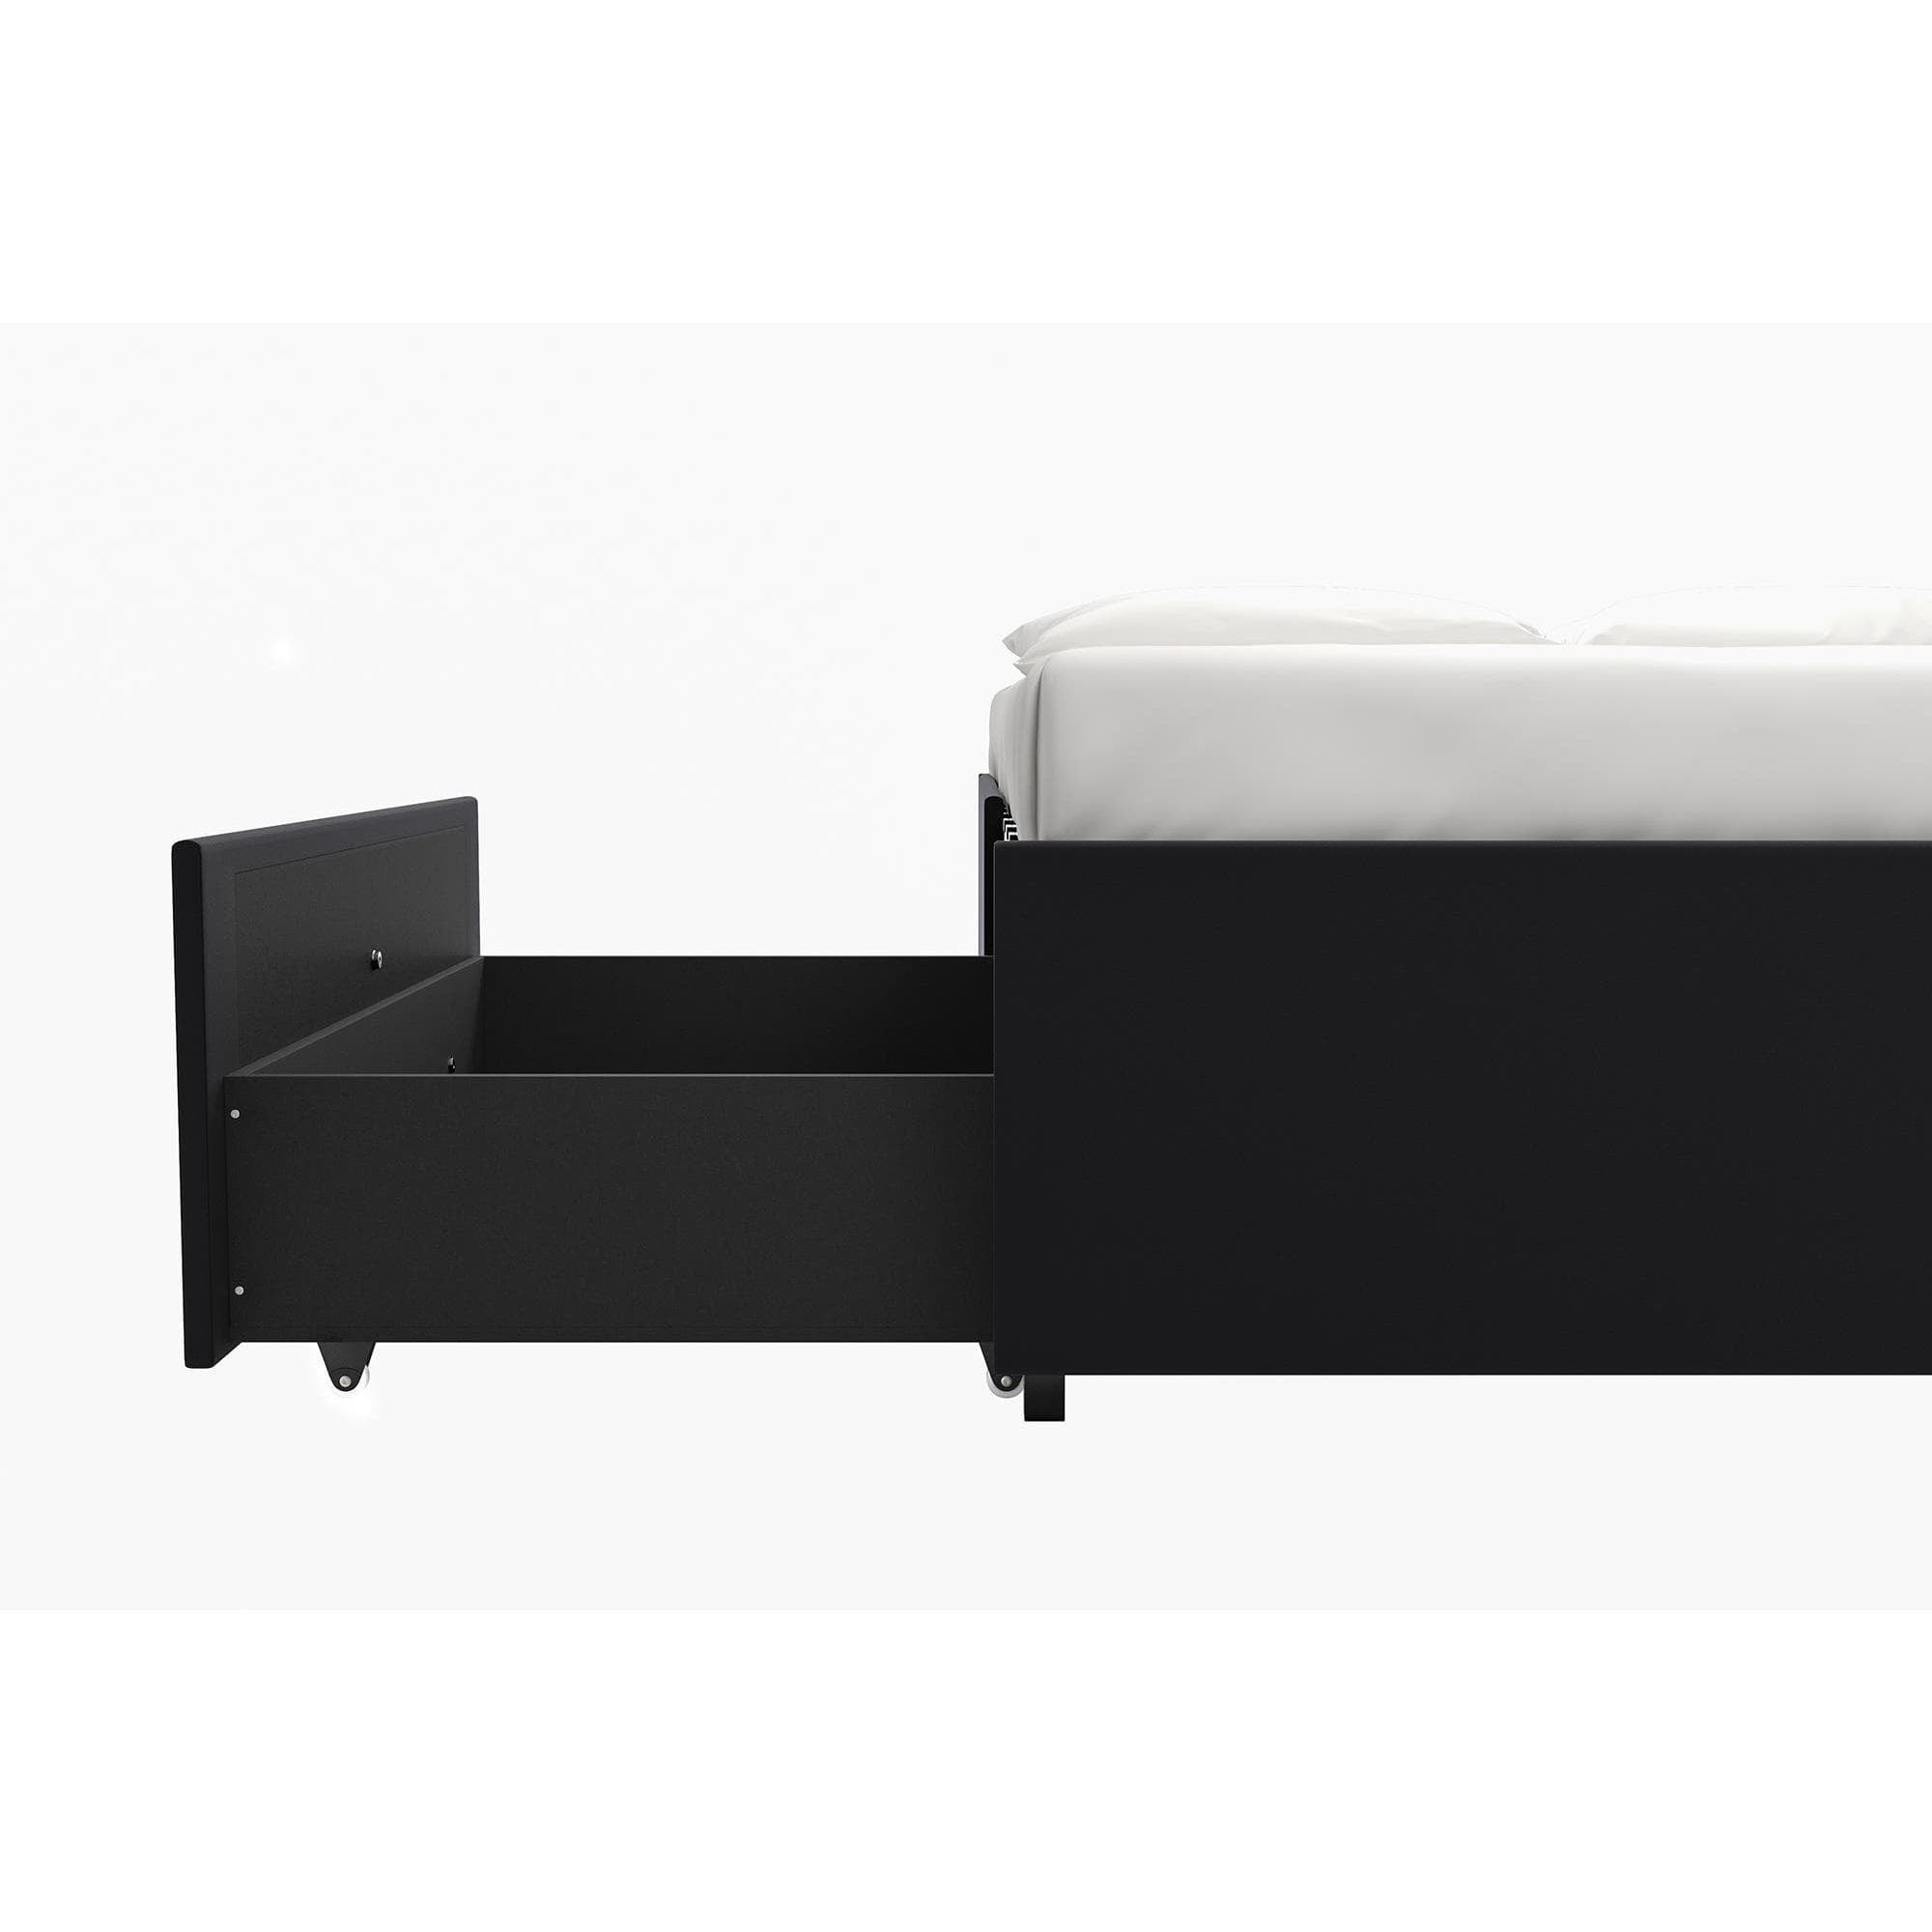 DHP Maven Upholstered Storage Bed, King, Black Faux Leather